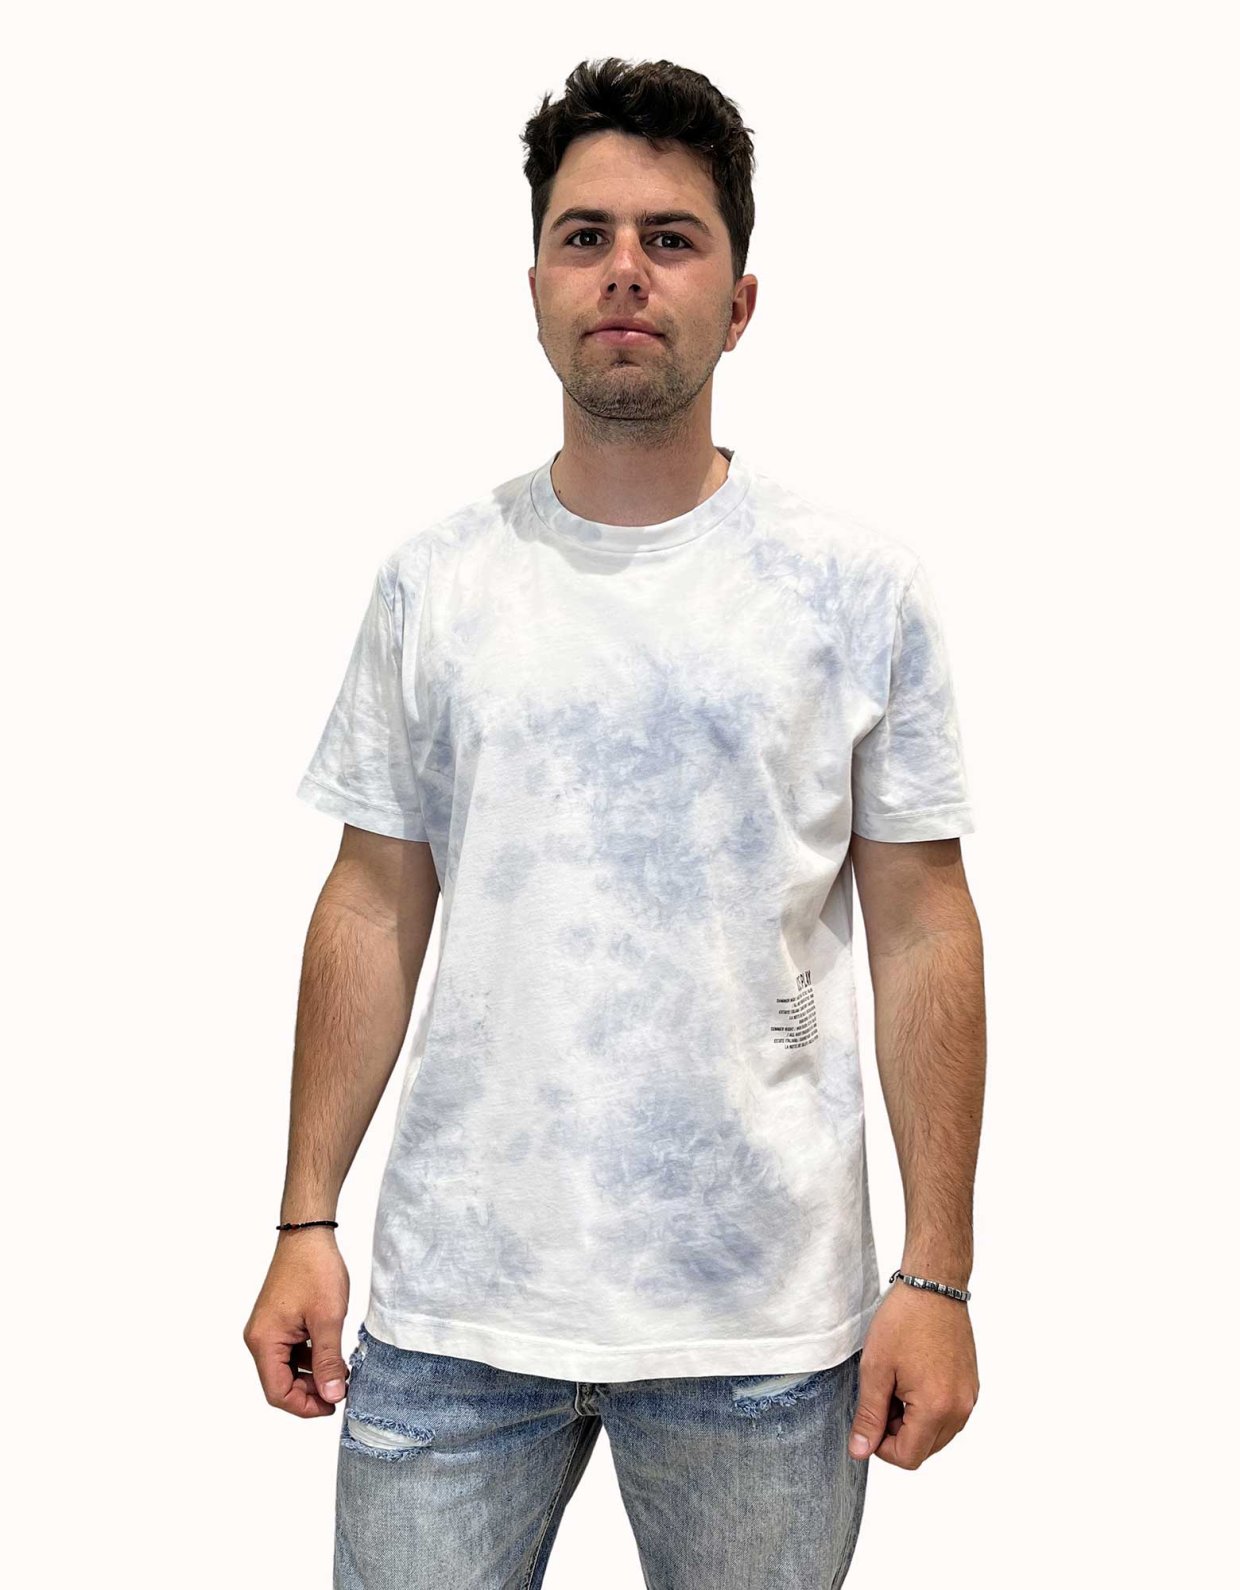 Ice Play Tie dye jersey t-shirt white grey